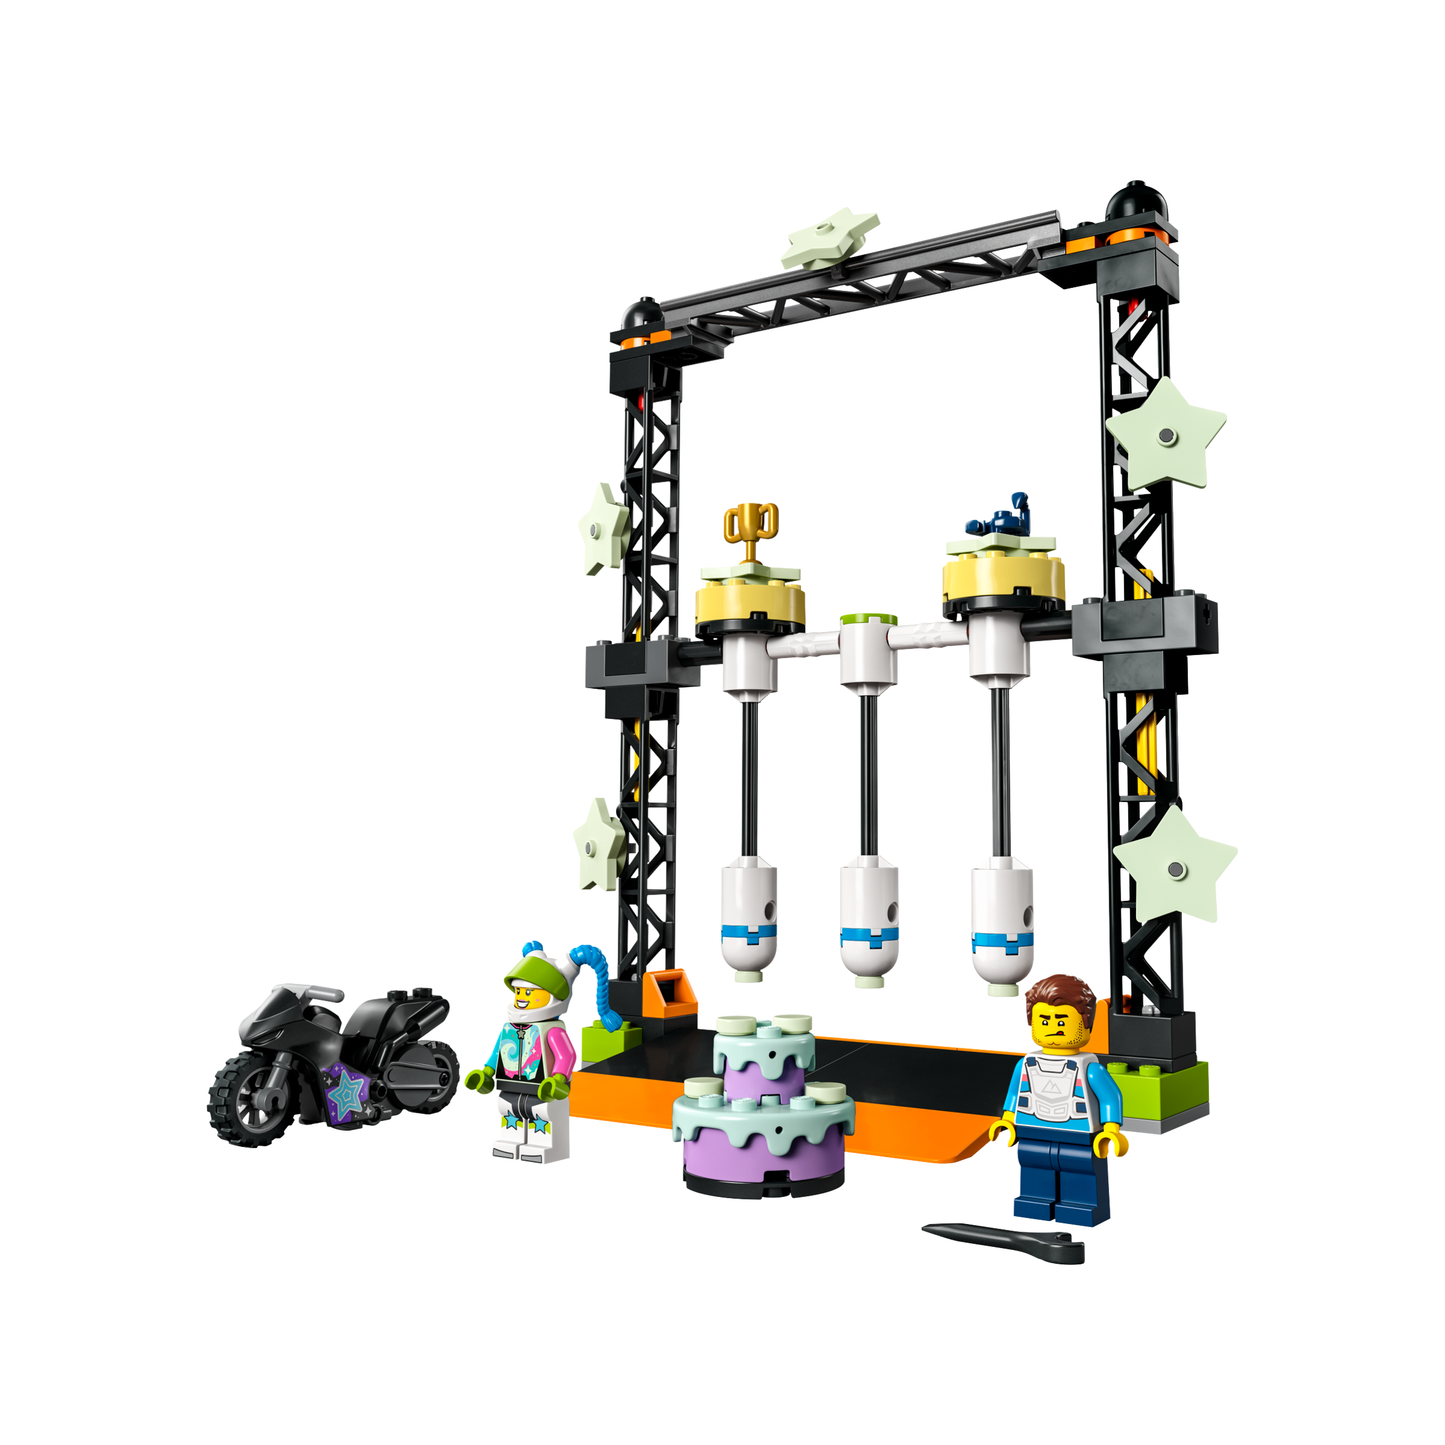 Lego City The Knockdown Stunt Challenge 60341